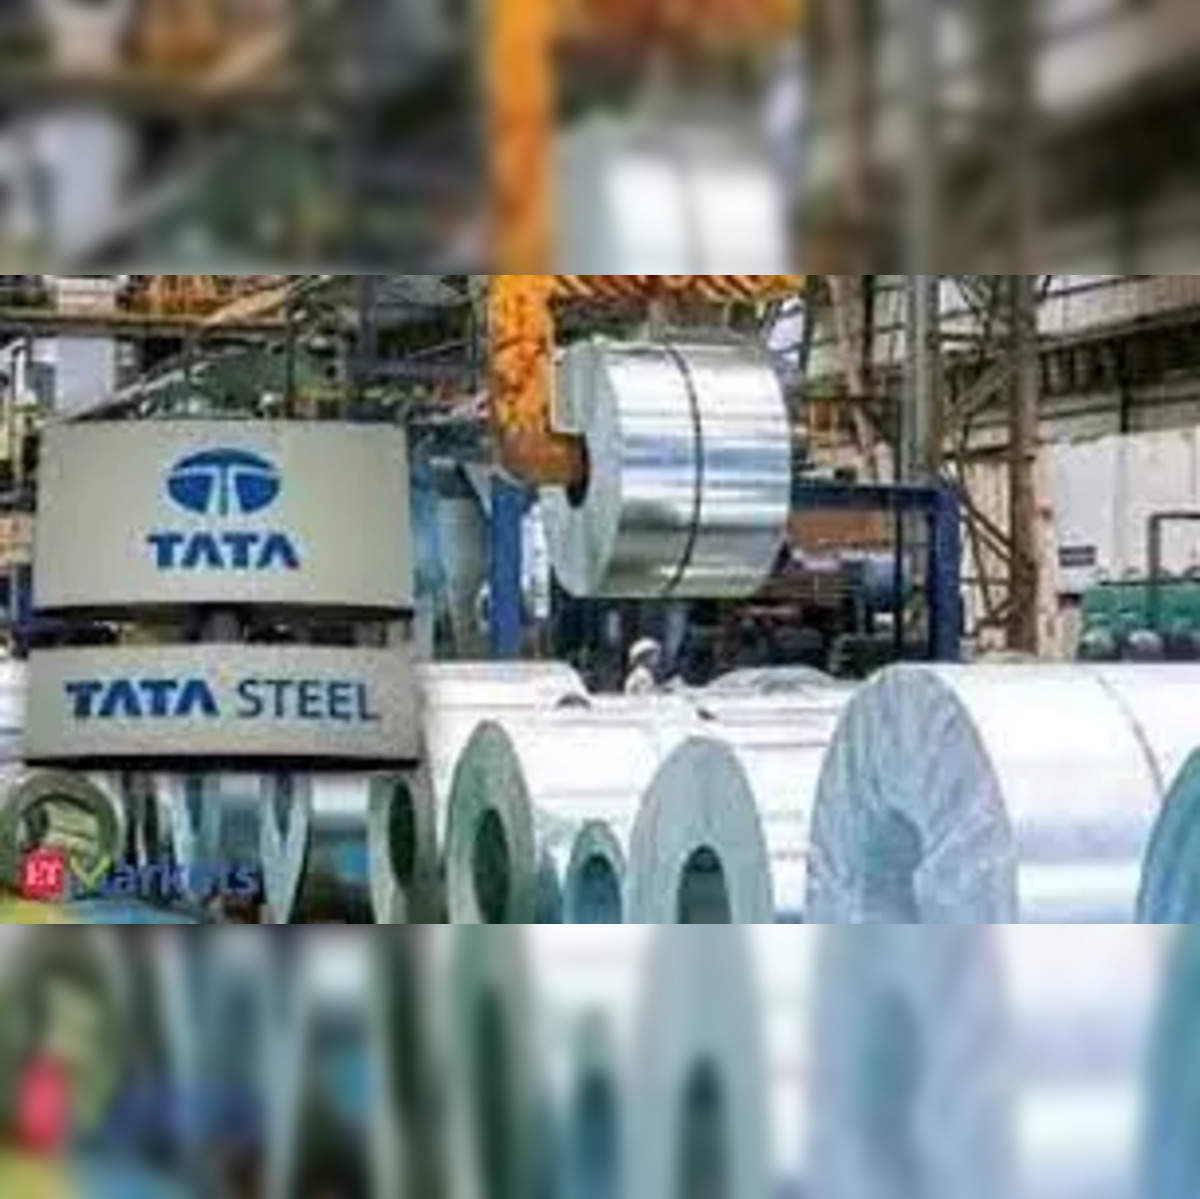 Tata Steel Share Price Today - Tata Steel Ltd Stock Price Live NSE/BSE